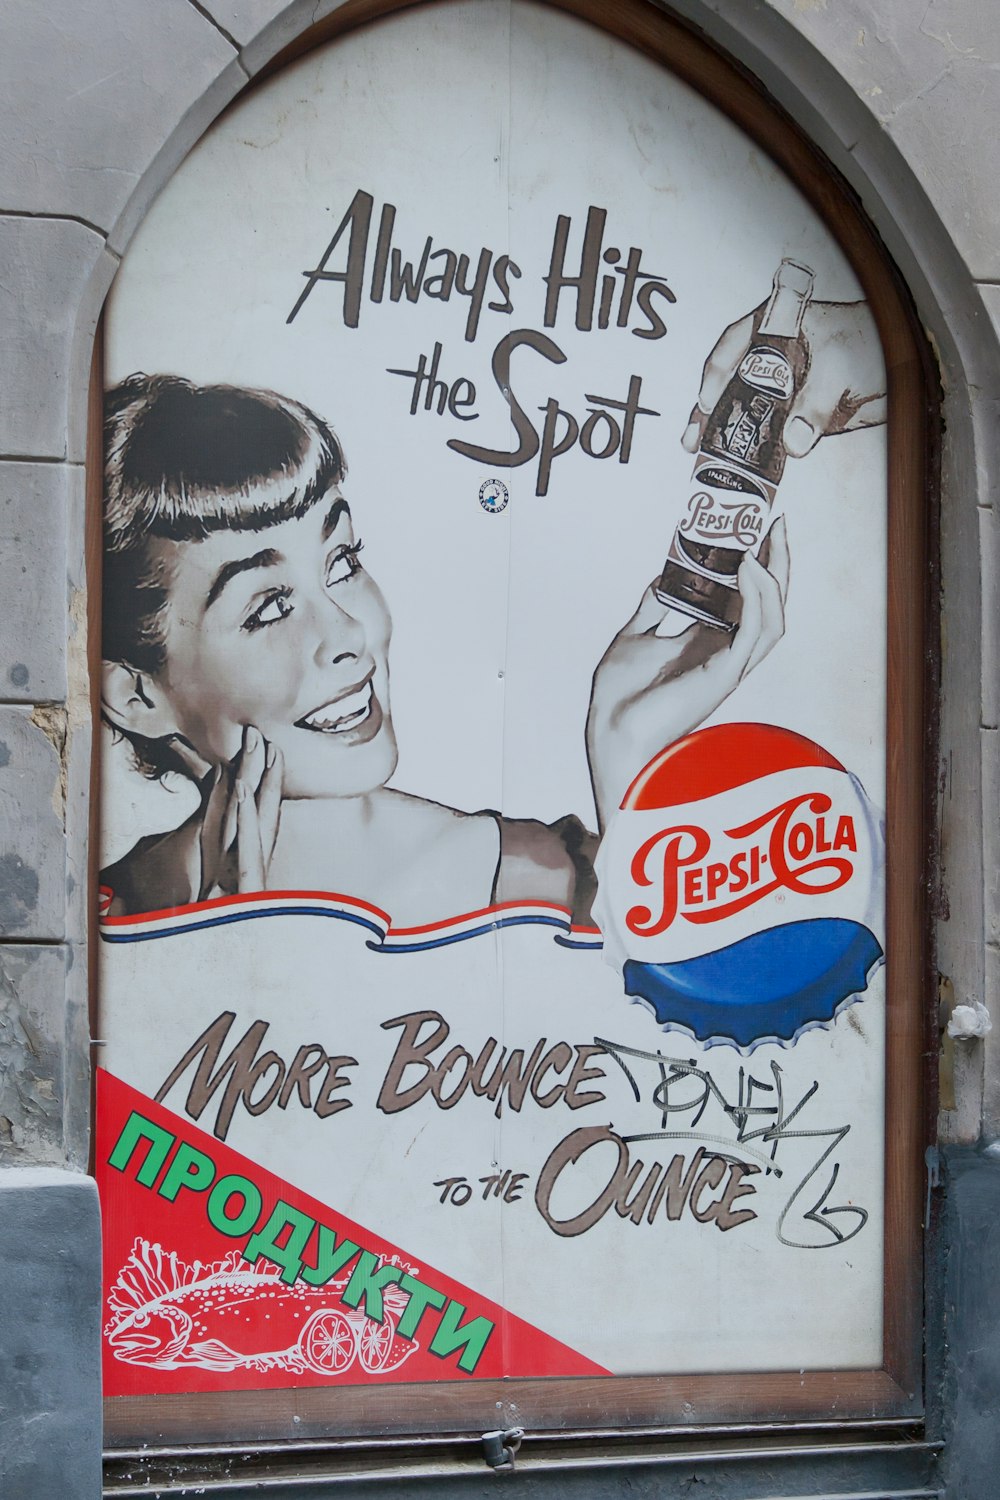 Pepsi-Cola painting